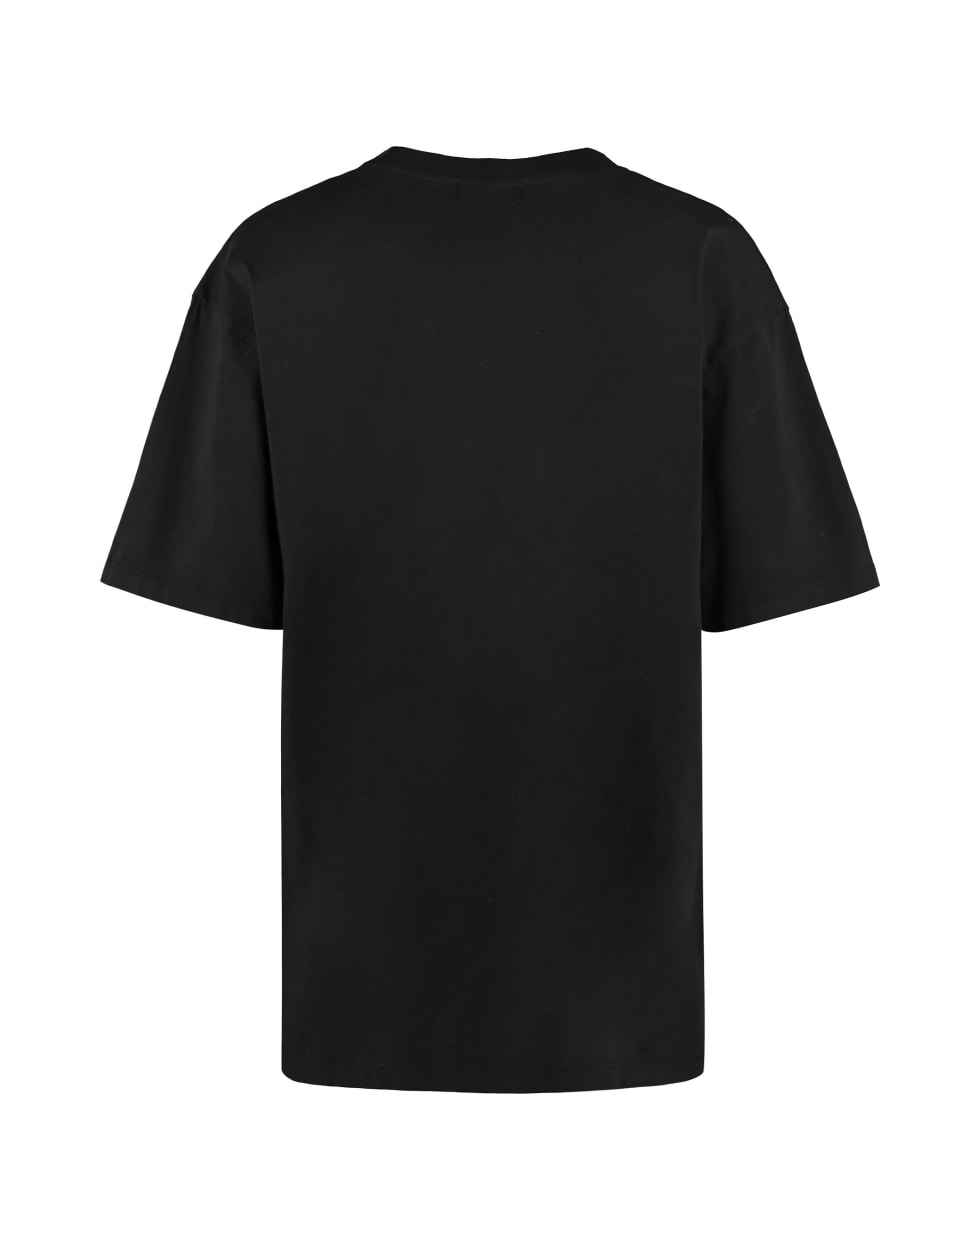 Maison Labiche Printed Cotton T-shirt | italist, ALWAYS LIKE A SALE